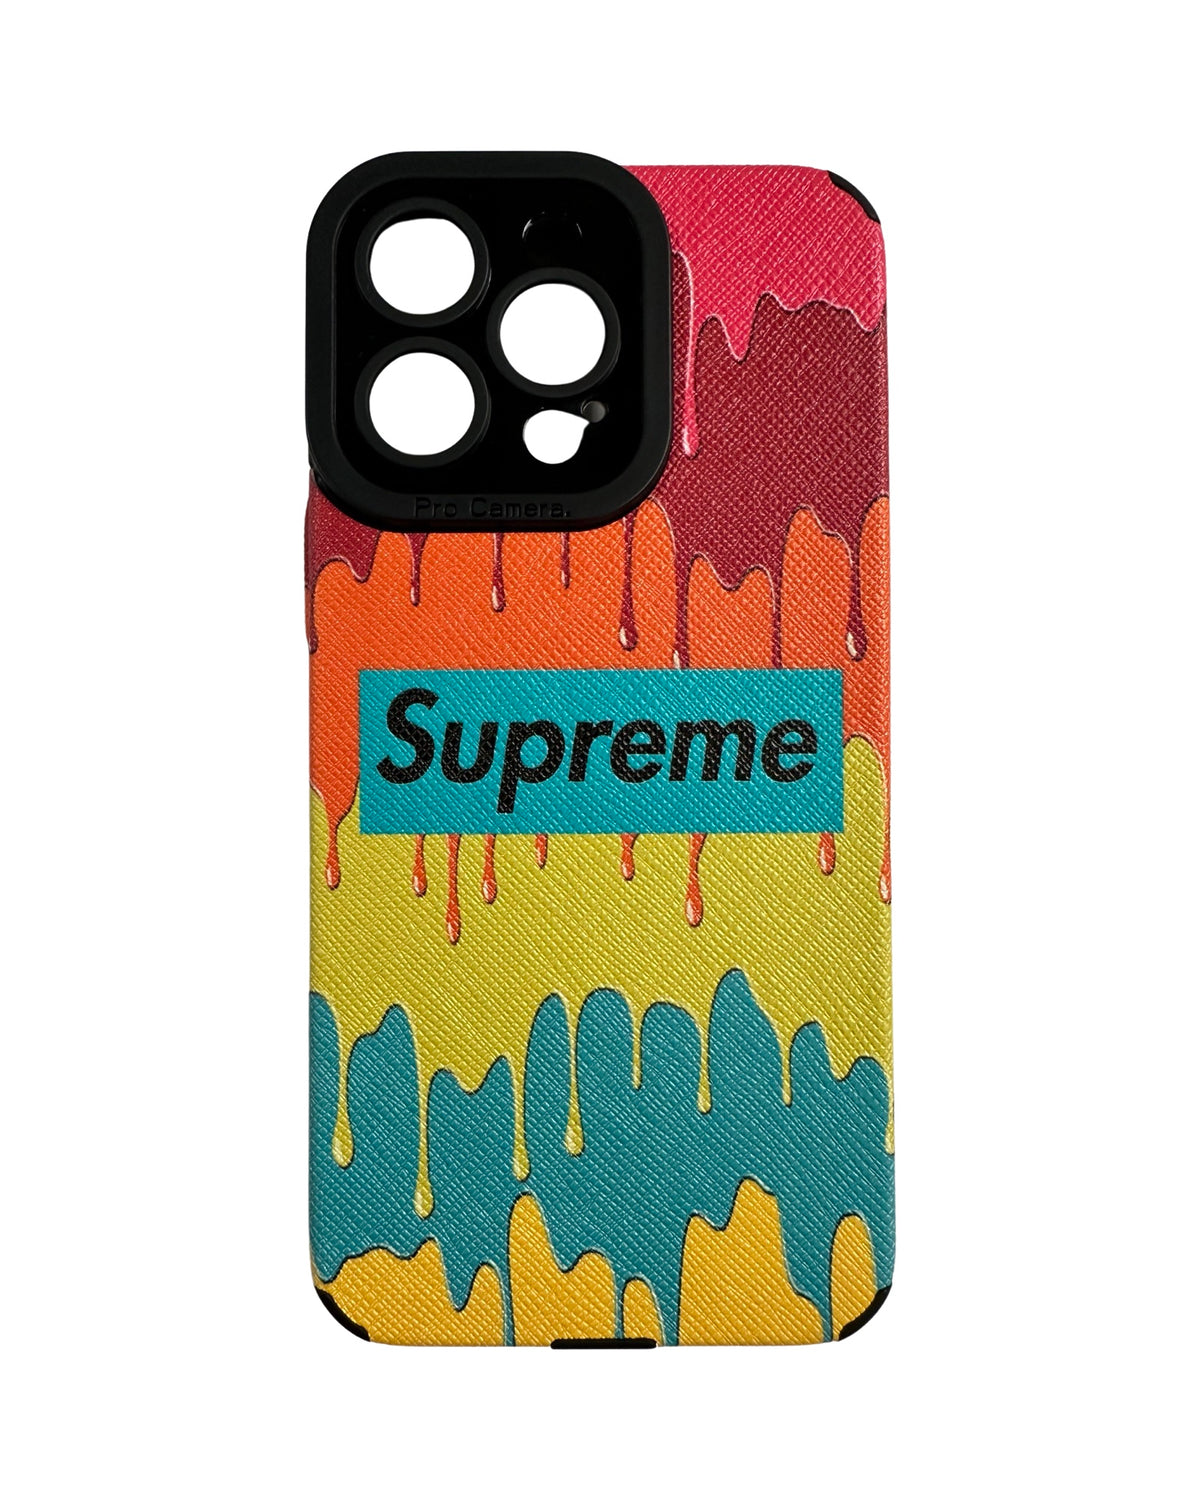 CaseNerd "Paint Drip Sup" iPhone Case